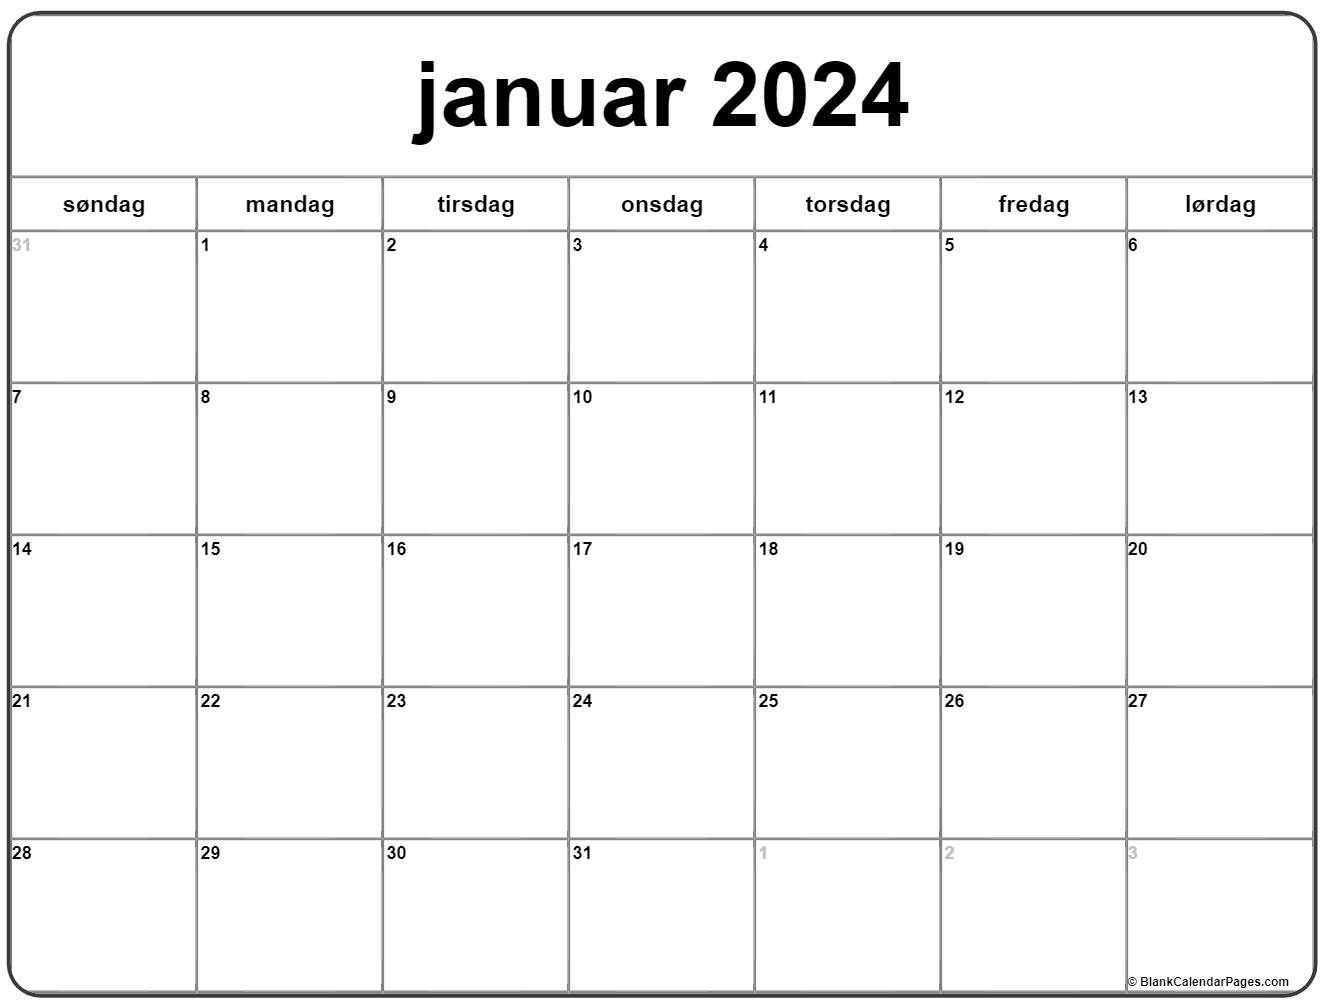 bison metal Haiku januar 2022 kalender Dansk | Kalender januar